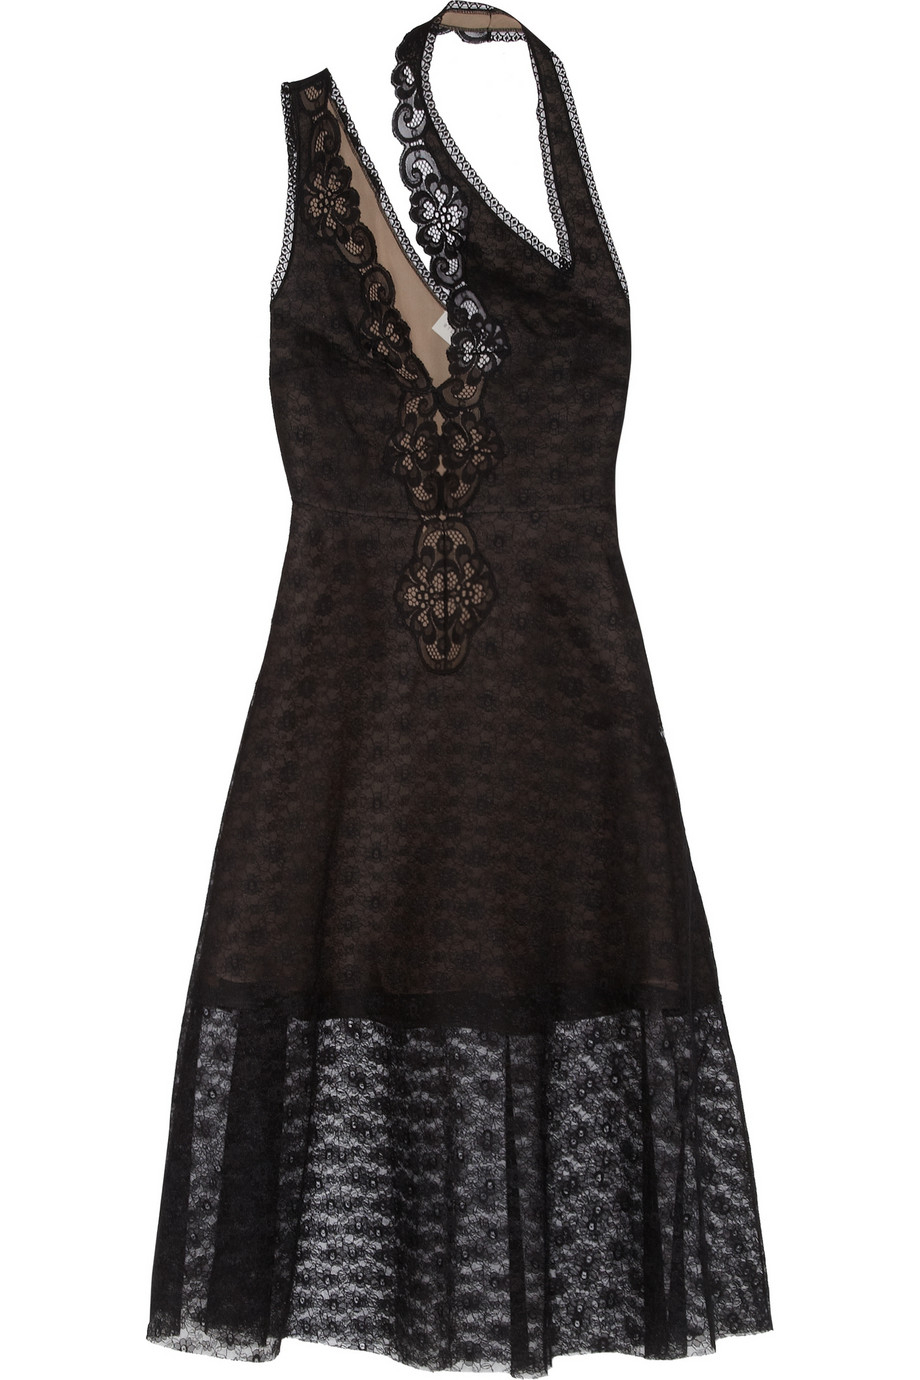 Lyst - Stella Mccartney Caroline Cutout Lace Dress in Black